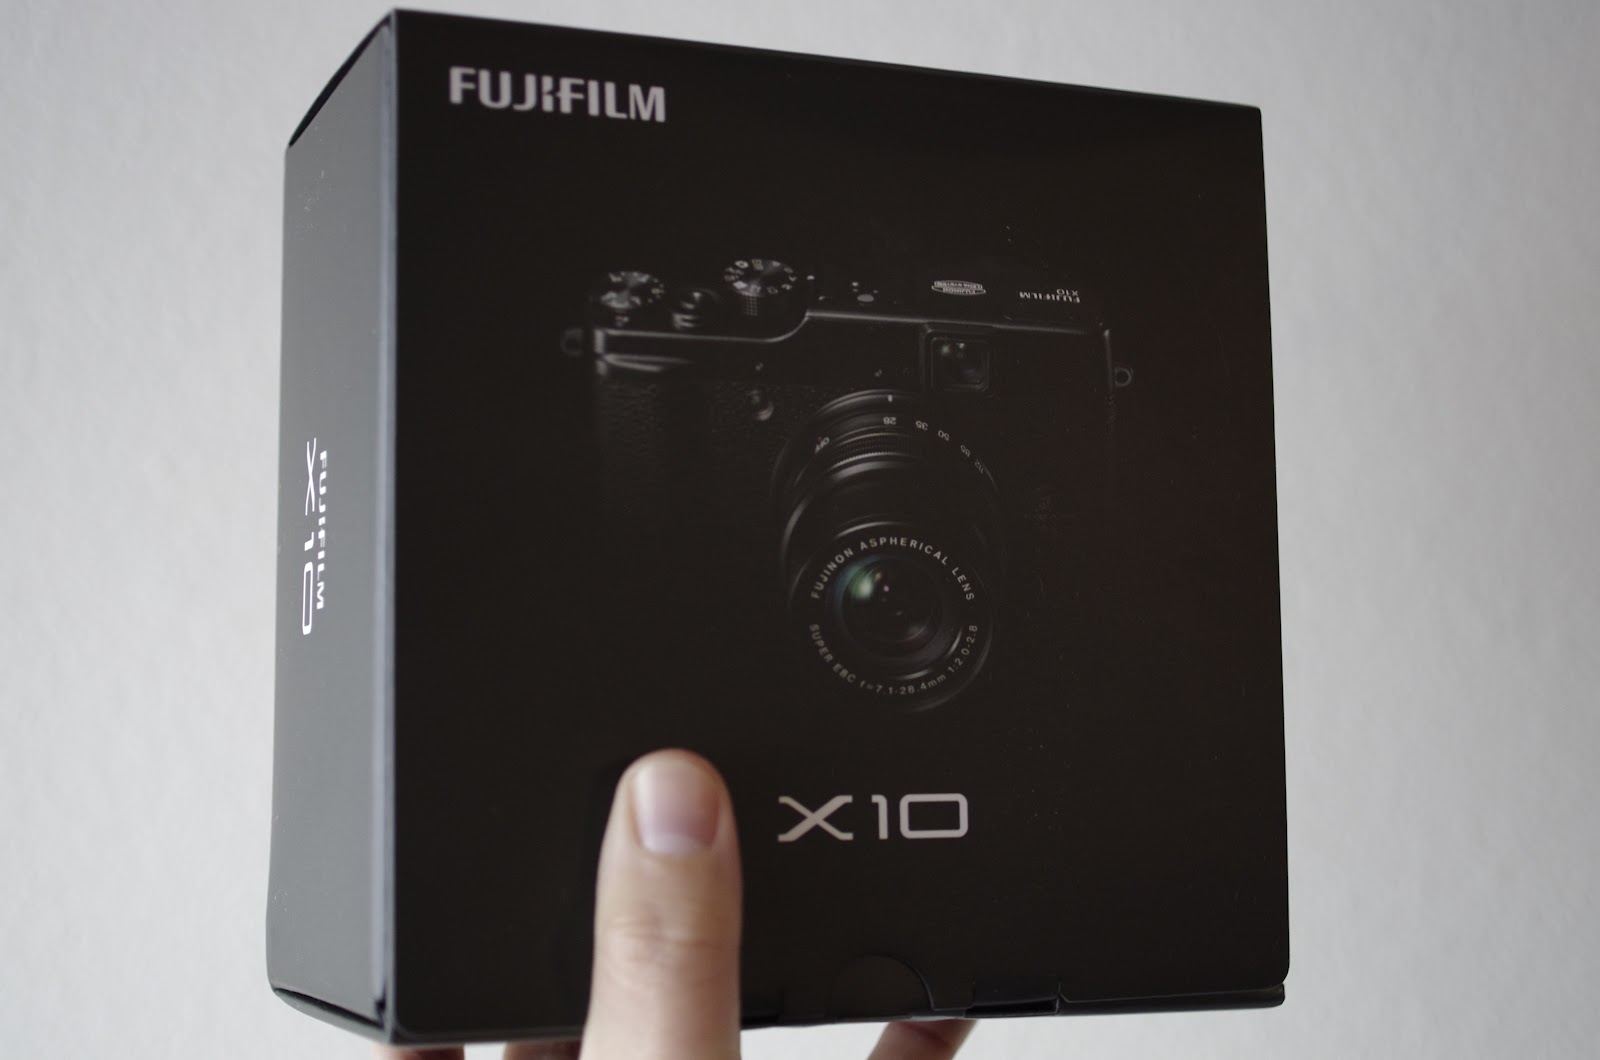 PHOTOGRAPHIC Fujifilm X10 Review